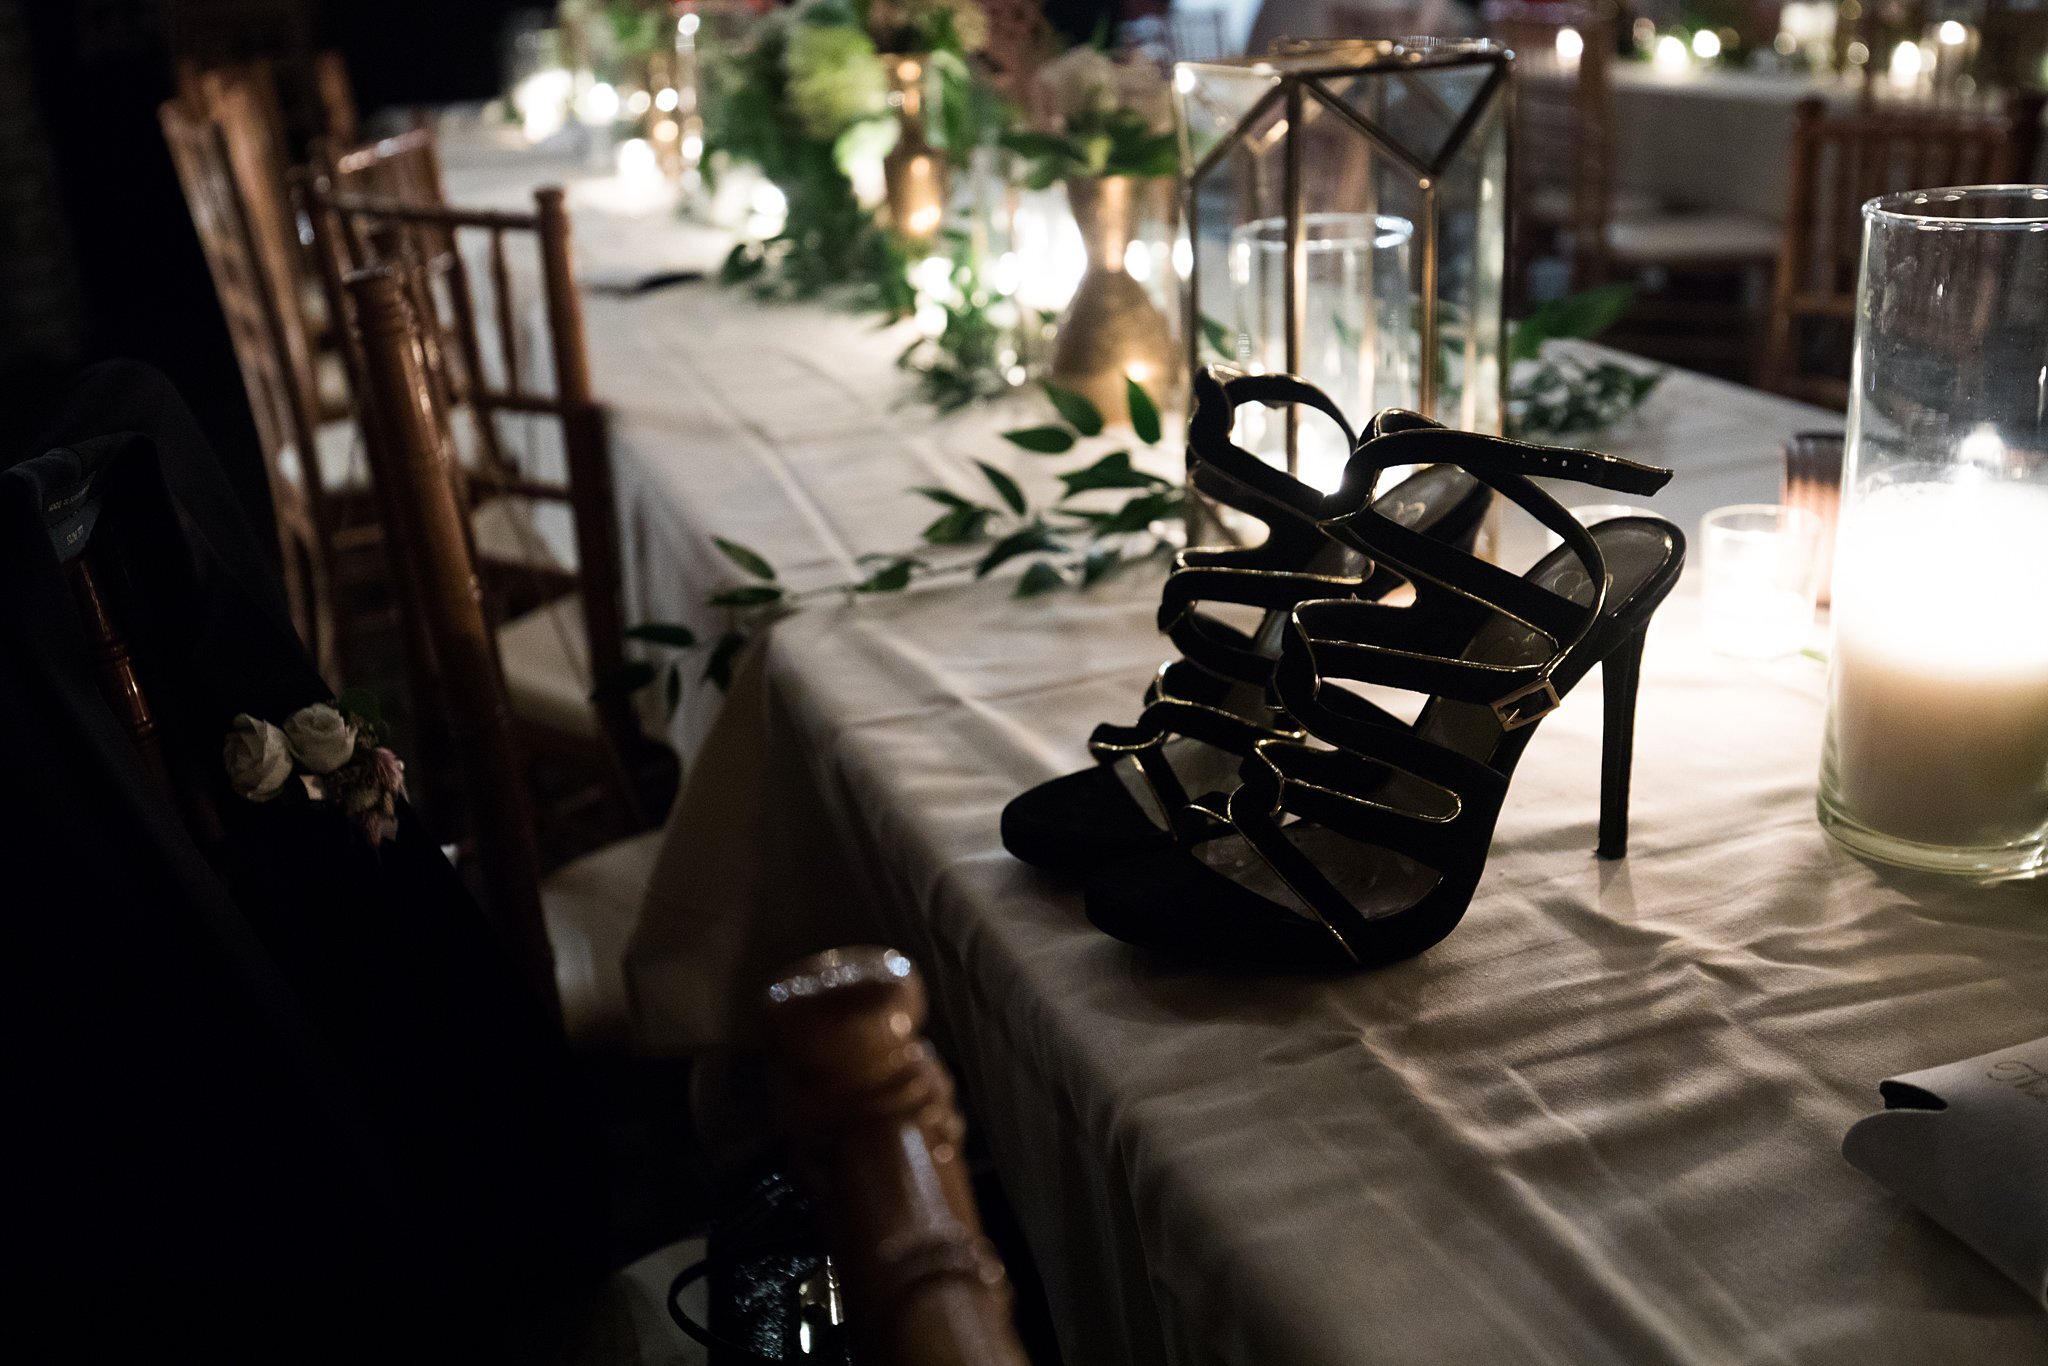  High heels left on table at Mayowood Stone Barn. 